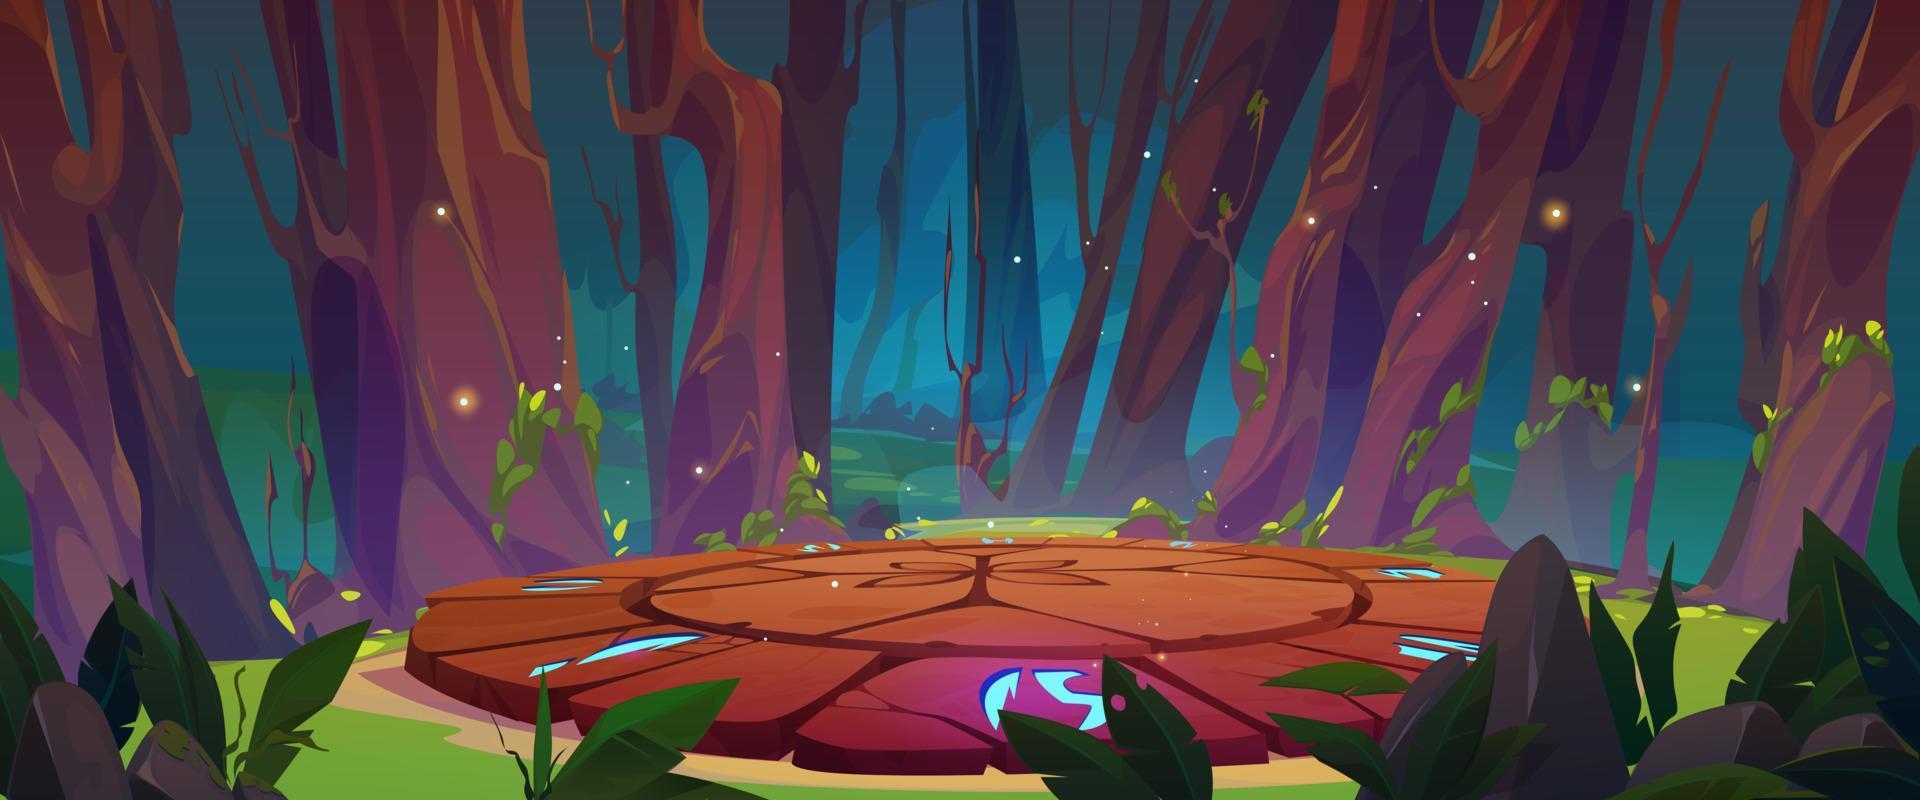 Cartoon game platform in old forest vector